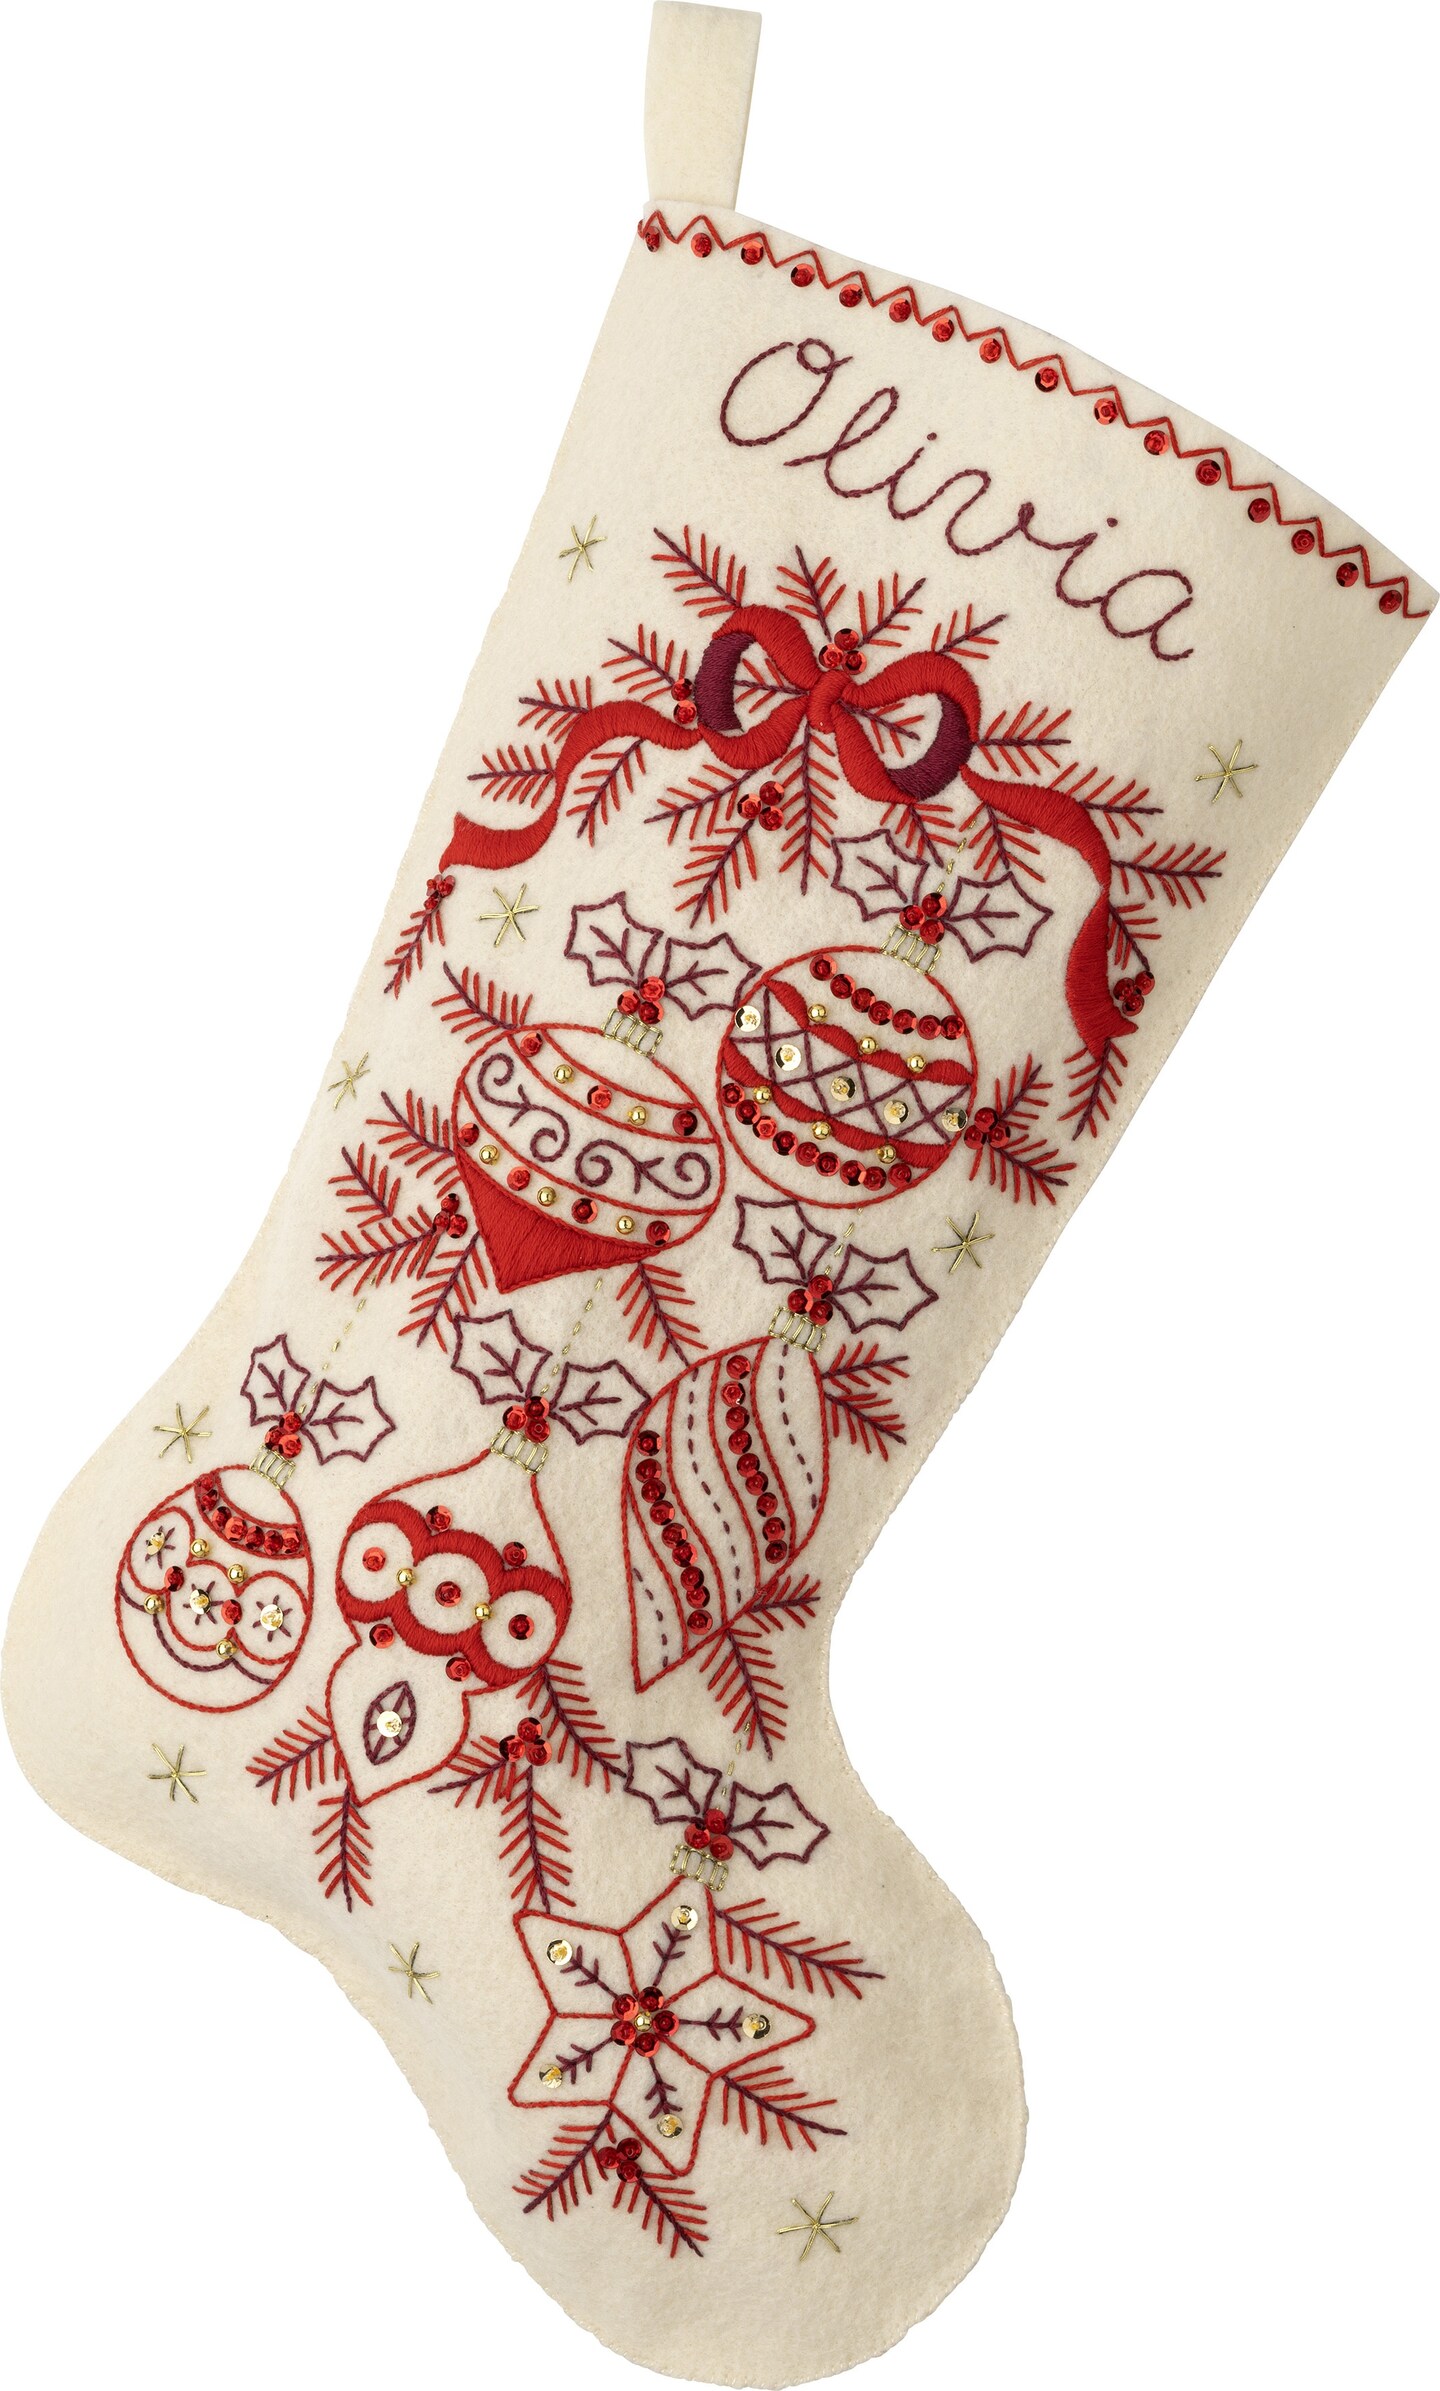 Bucilla Felt Stocking Applique Kit 18 Inch Long Classic Christmas